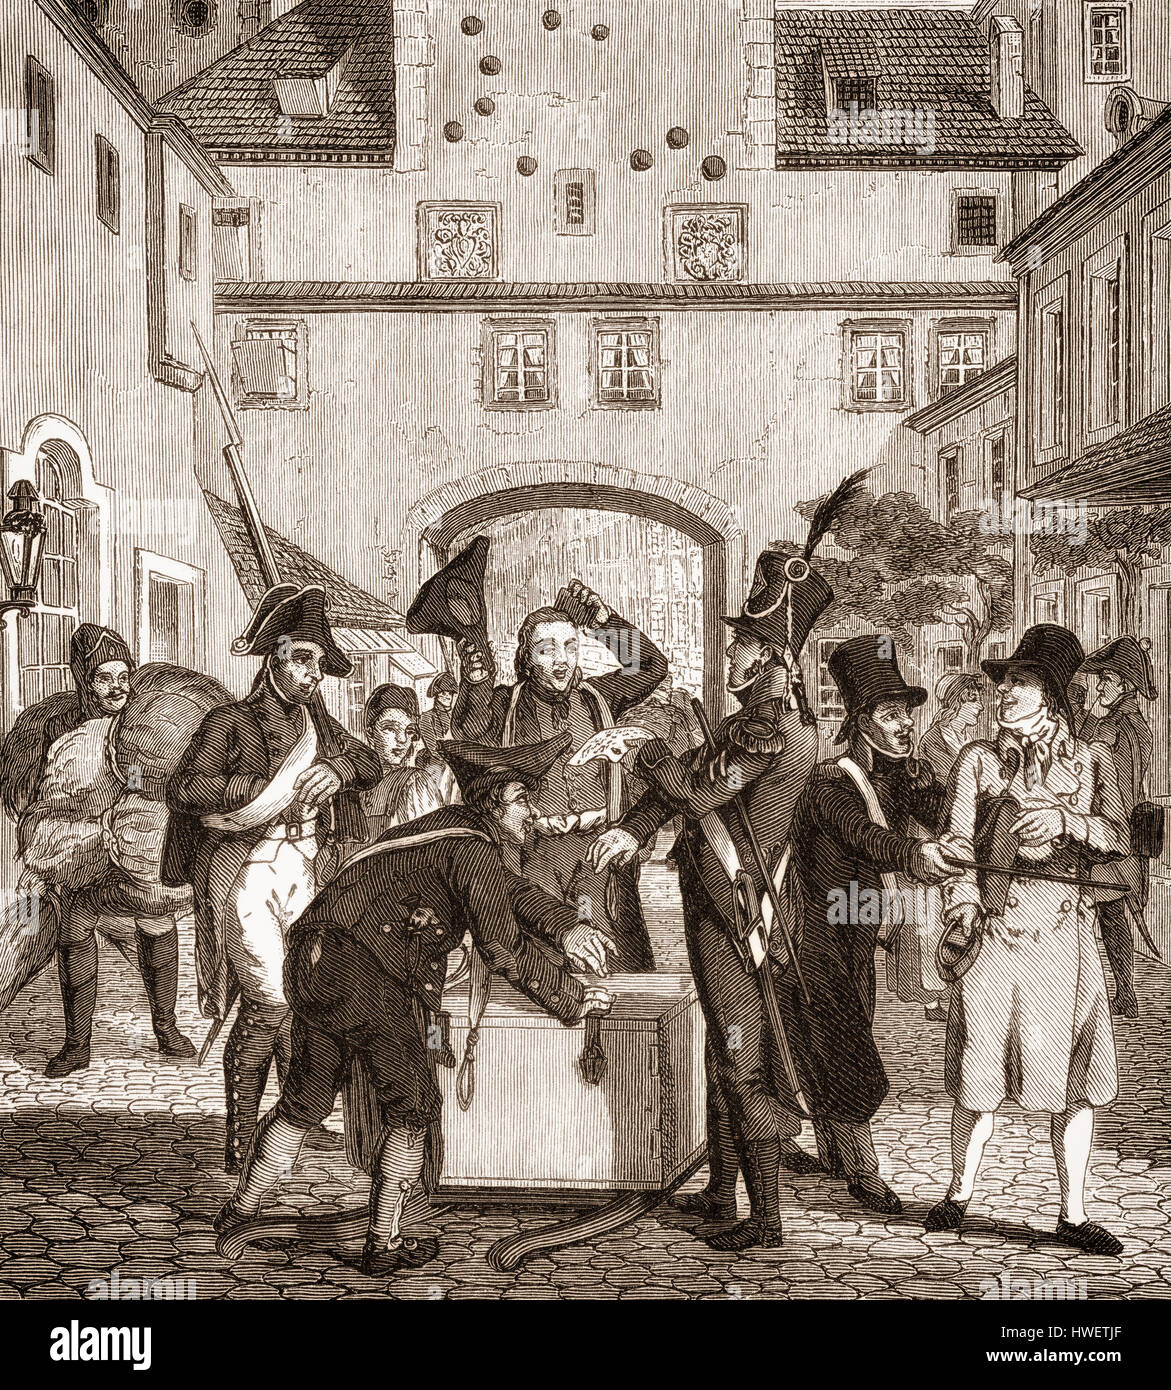 napoleon blockade of british